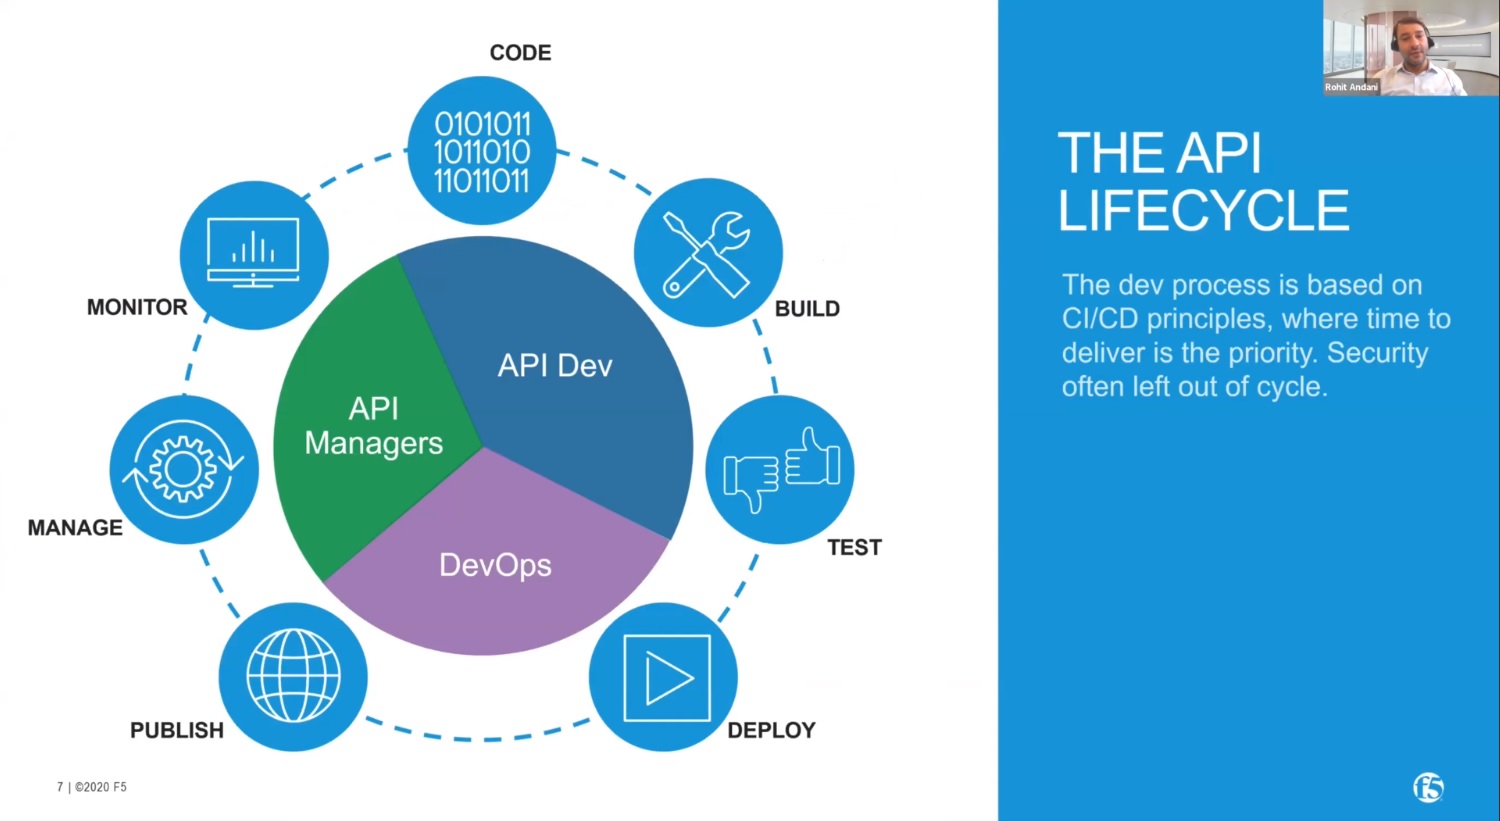 The API lifecycle